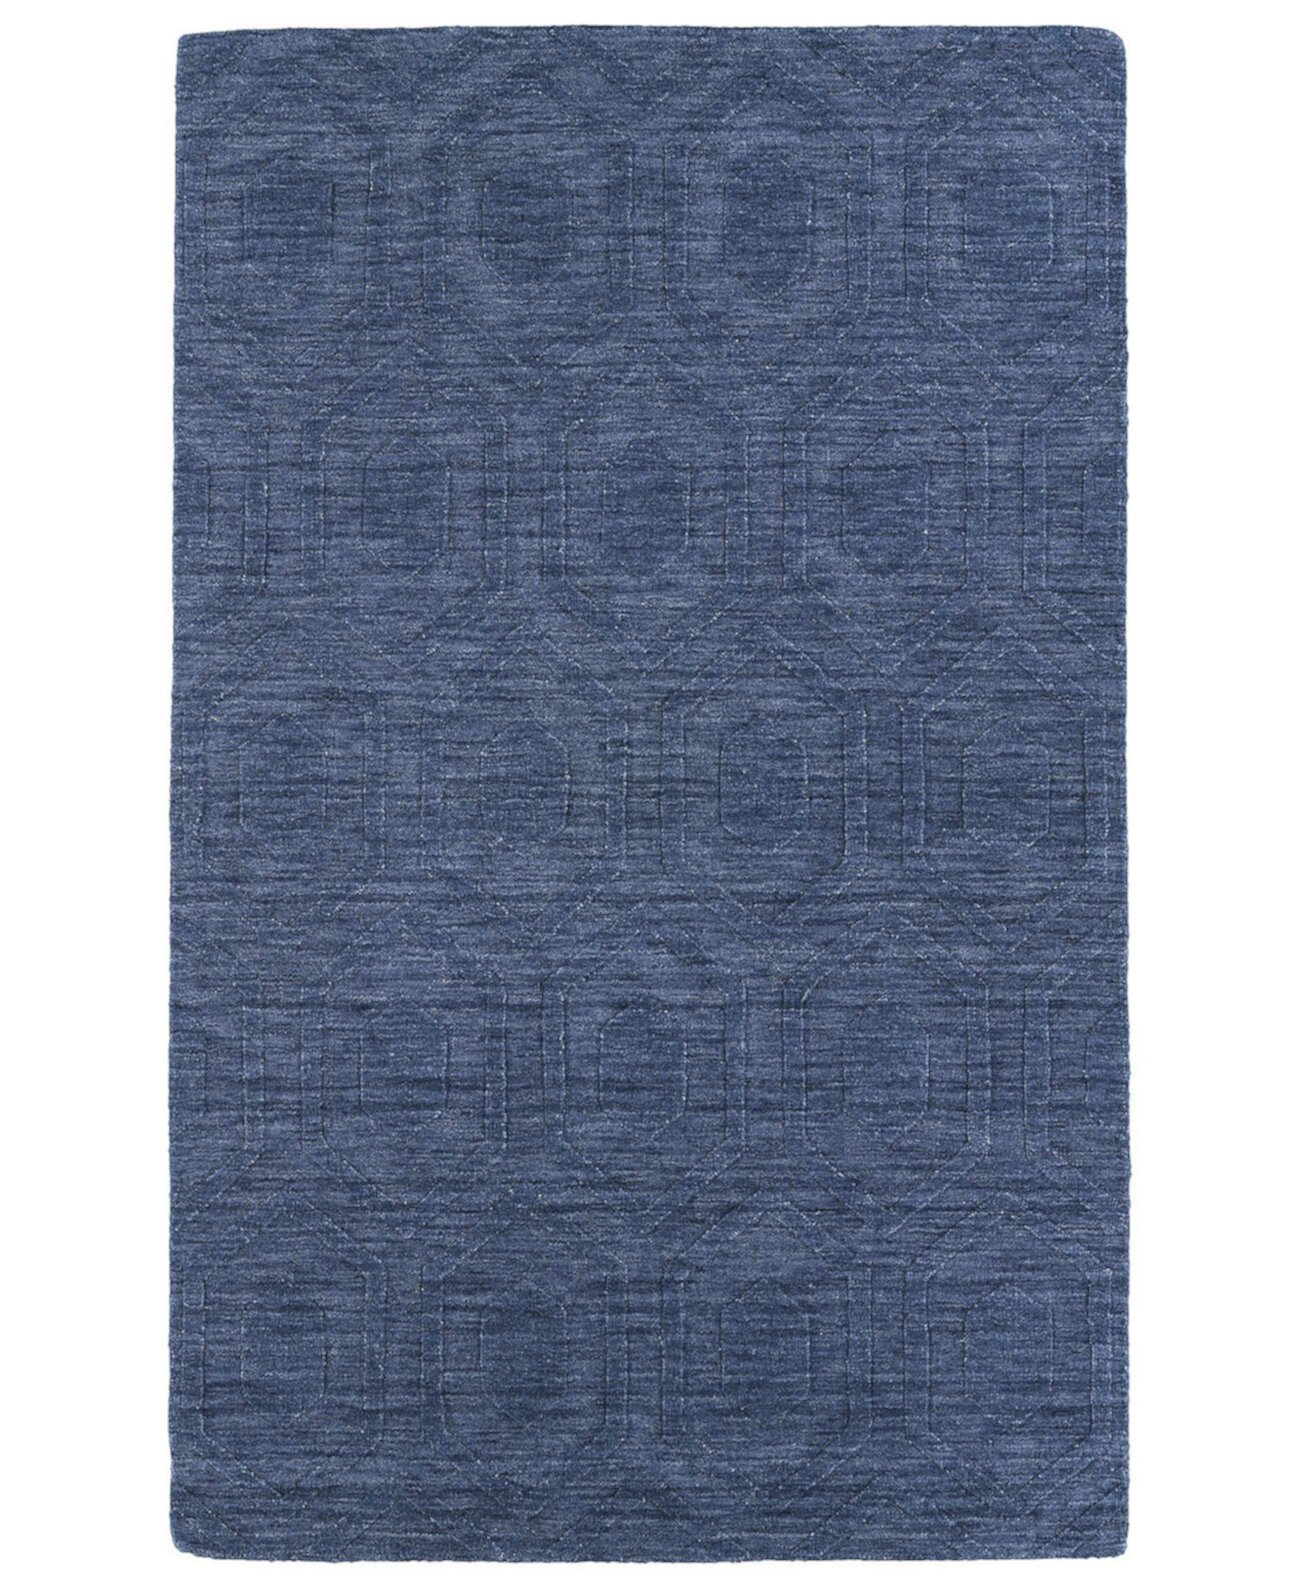 Отпечатки Modern IPM01-17 Синий коврик размером 3 фута 6 x 5 футов 6 дюймов Kaleen